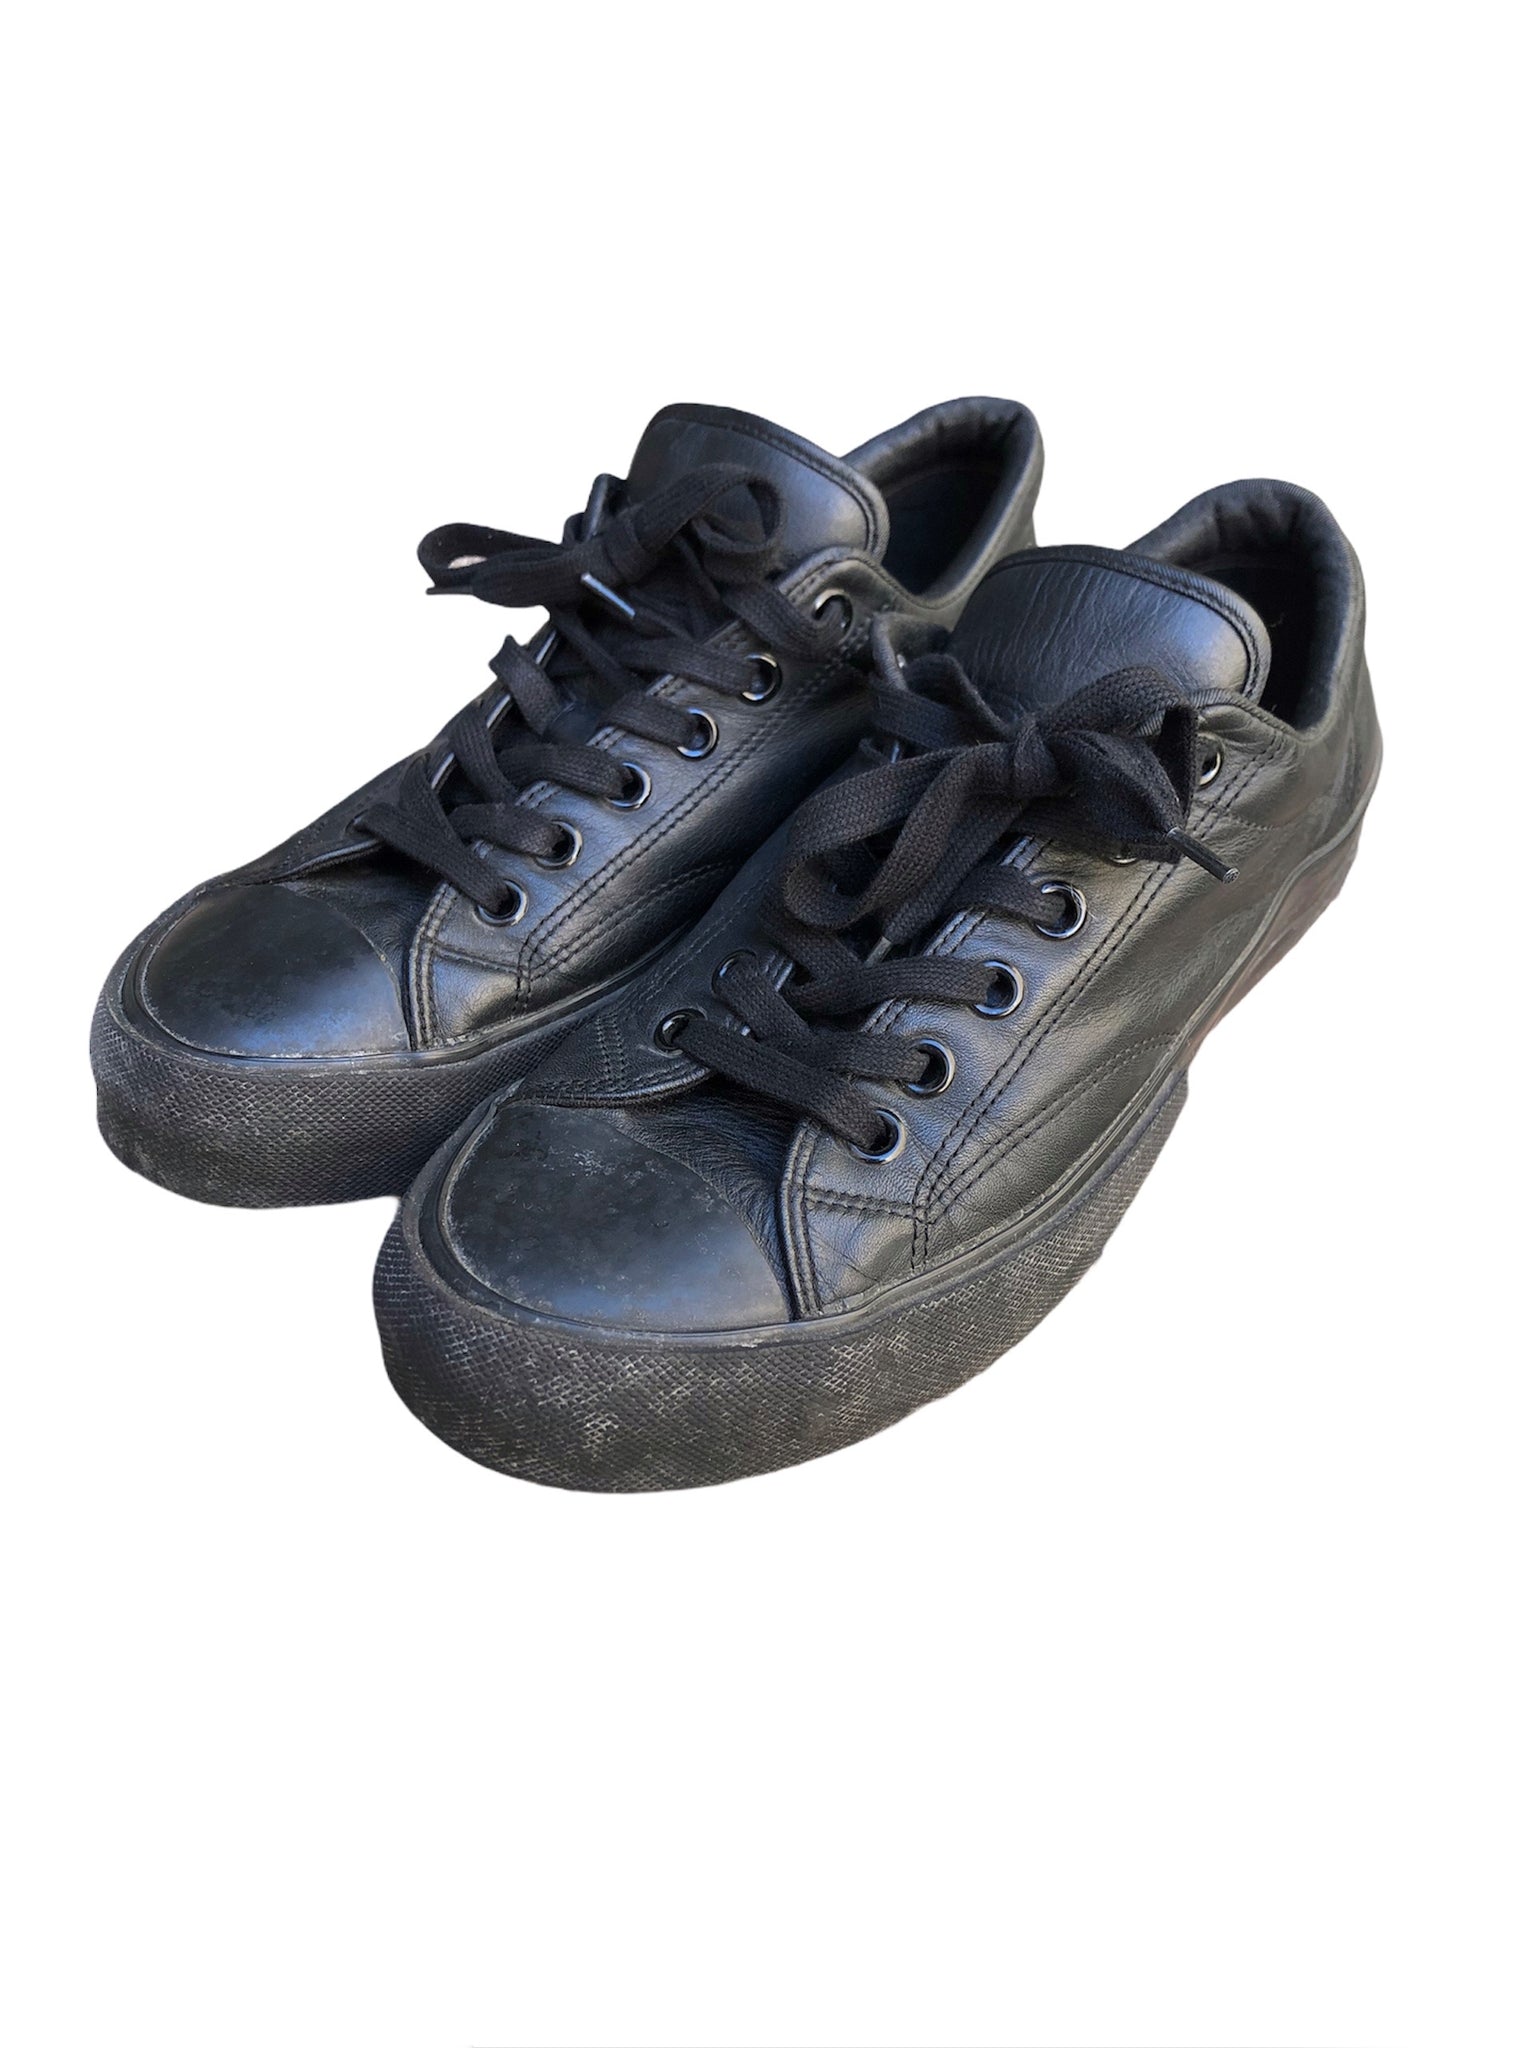 2001 Black Leather “Converse”